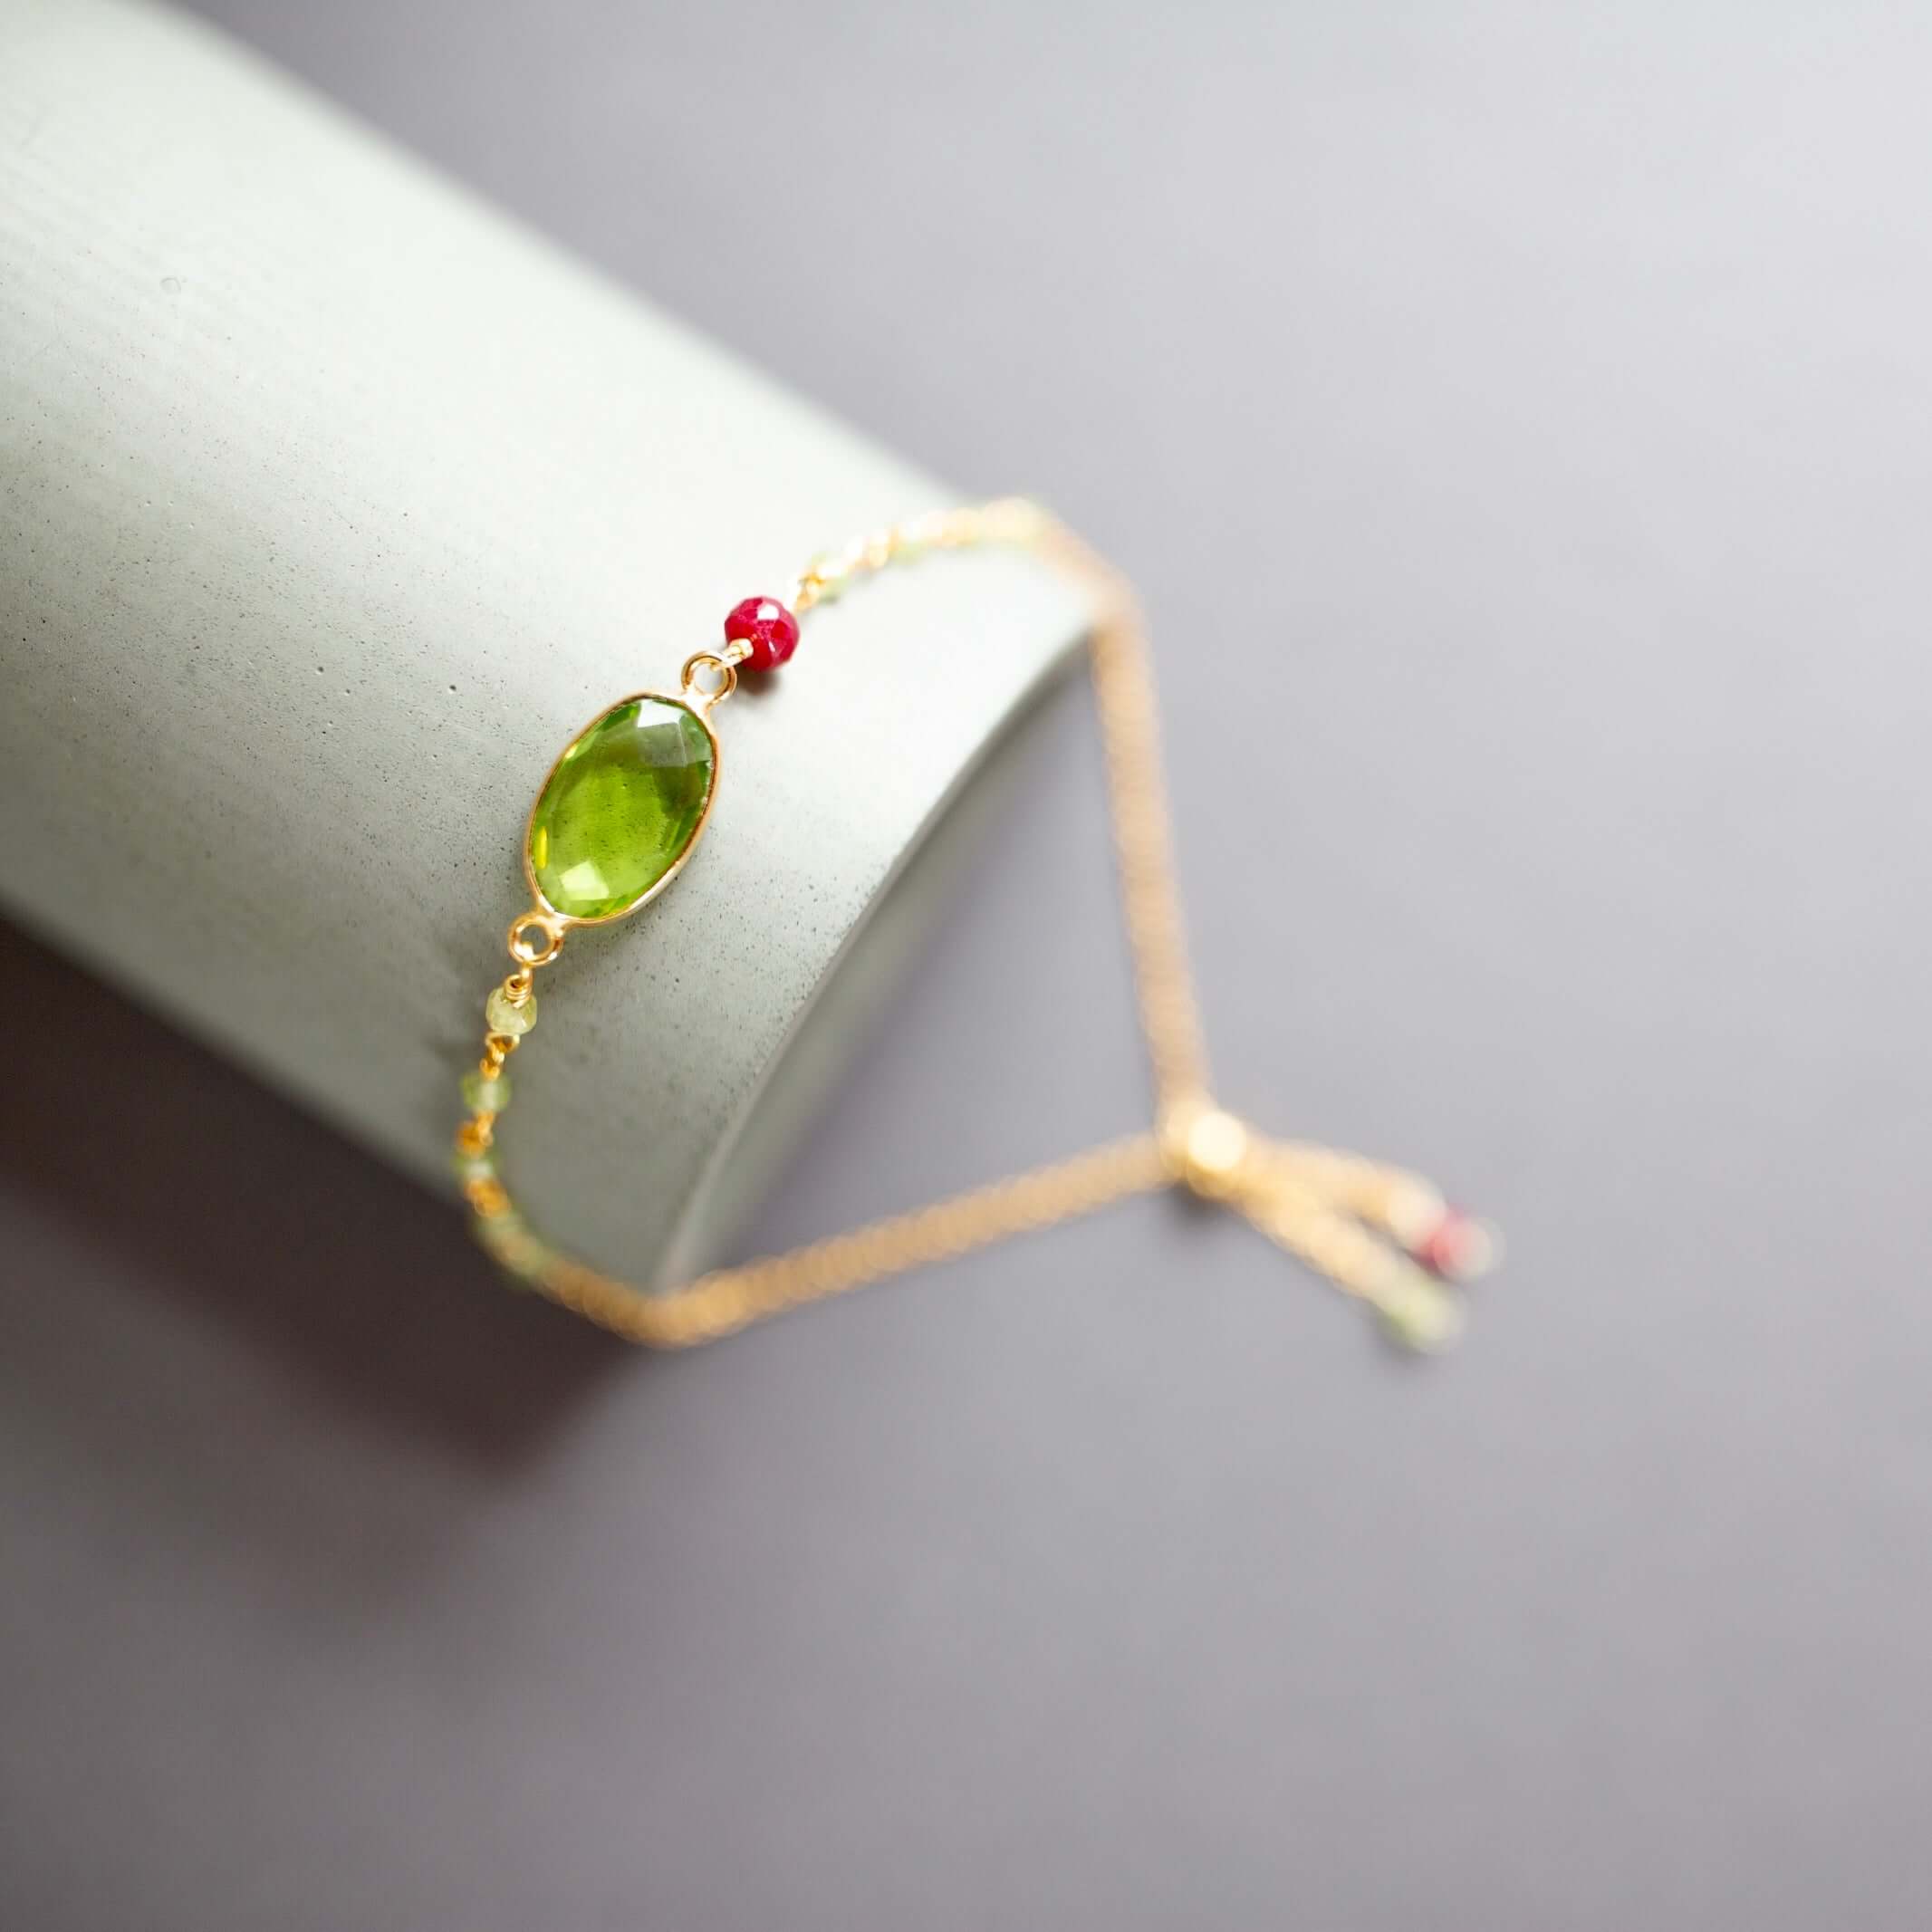 Peridot Quartz Bracelet - Radiant Green Elegance for Your Wrist